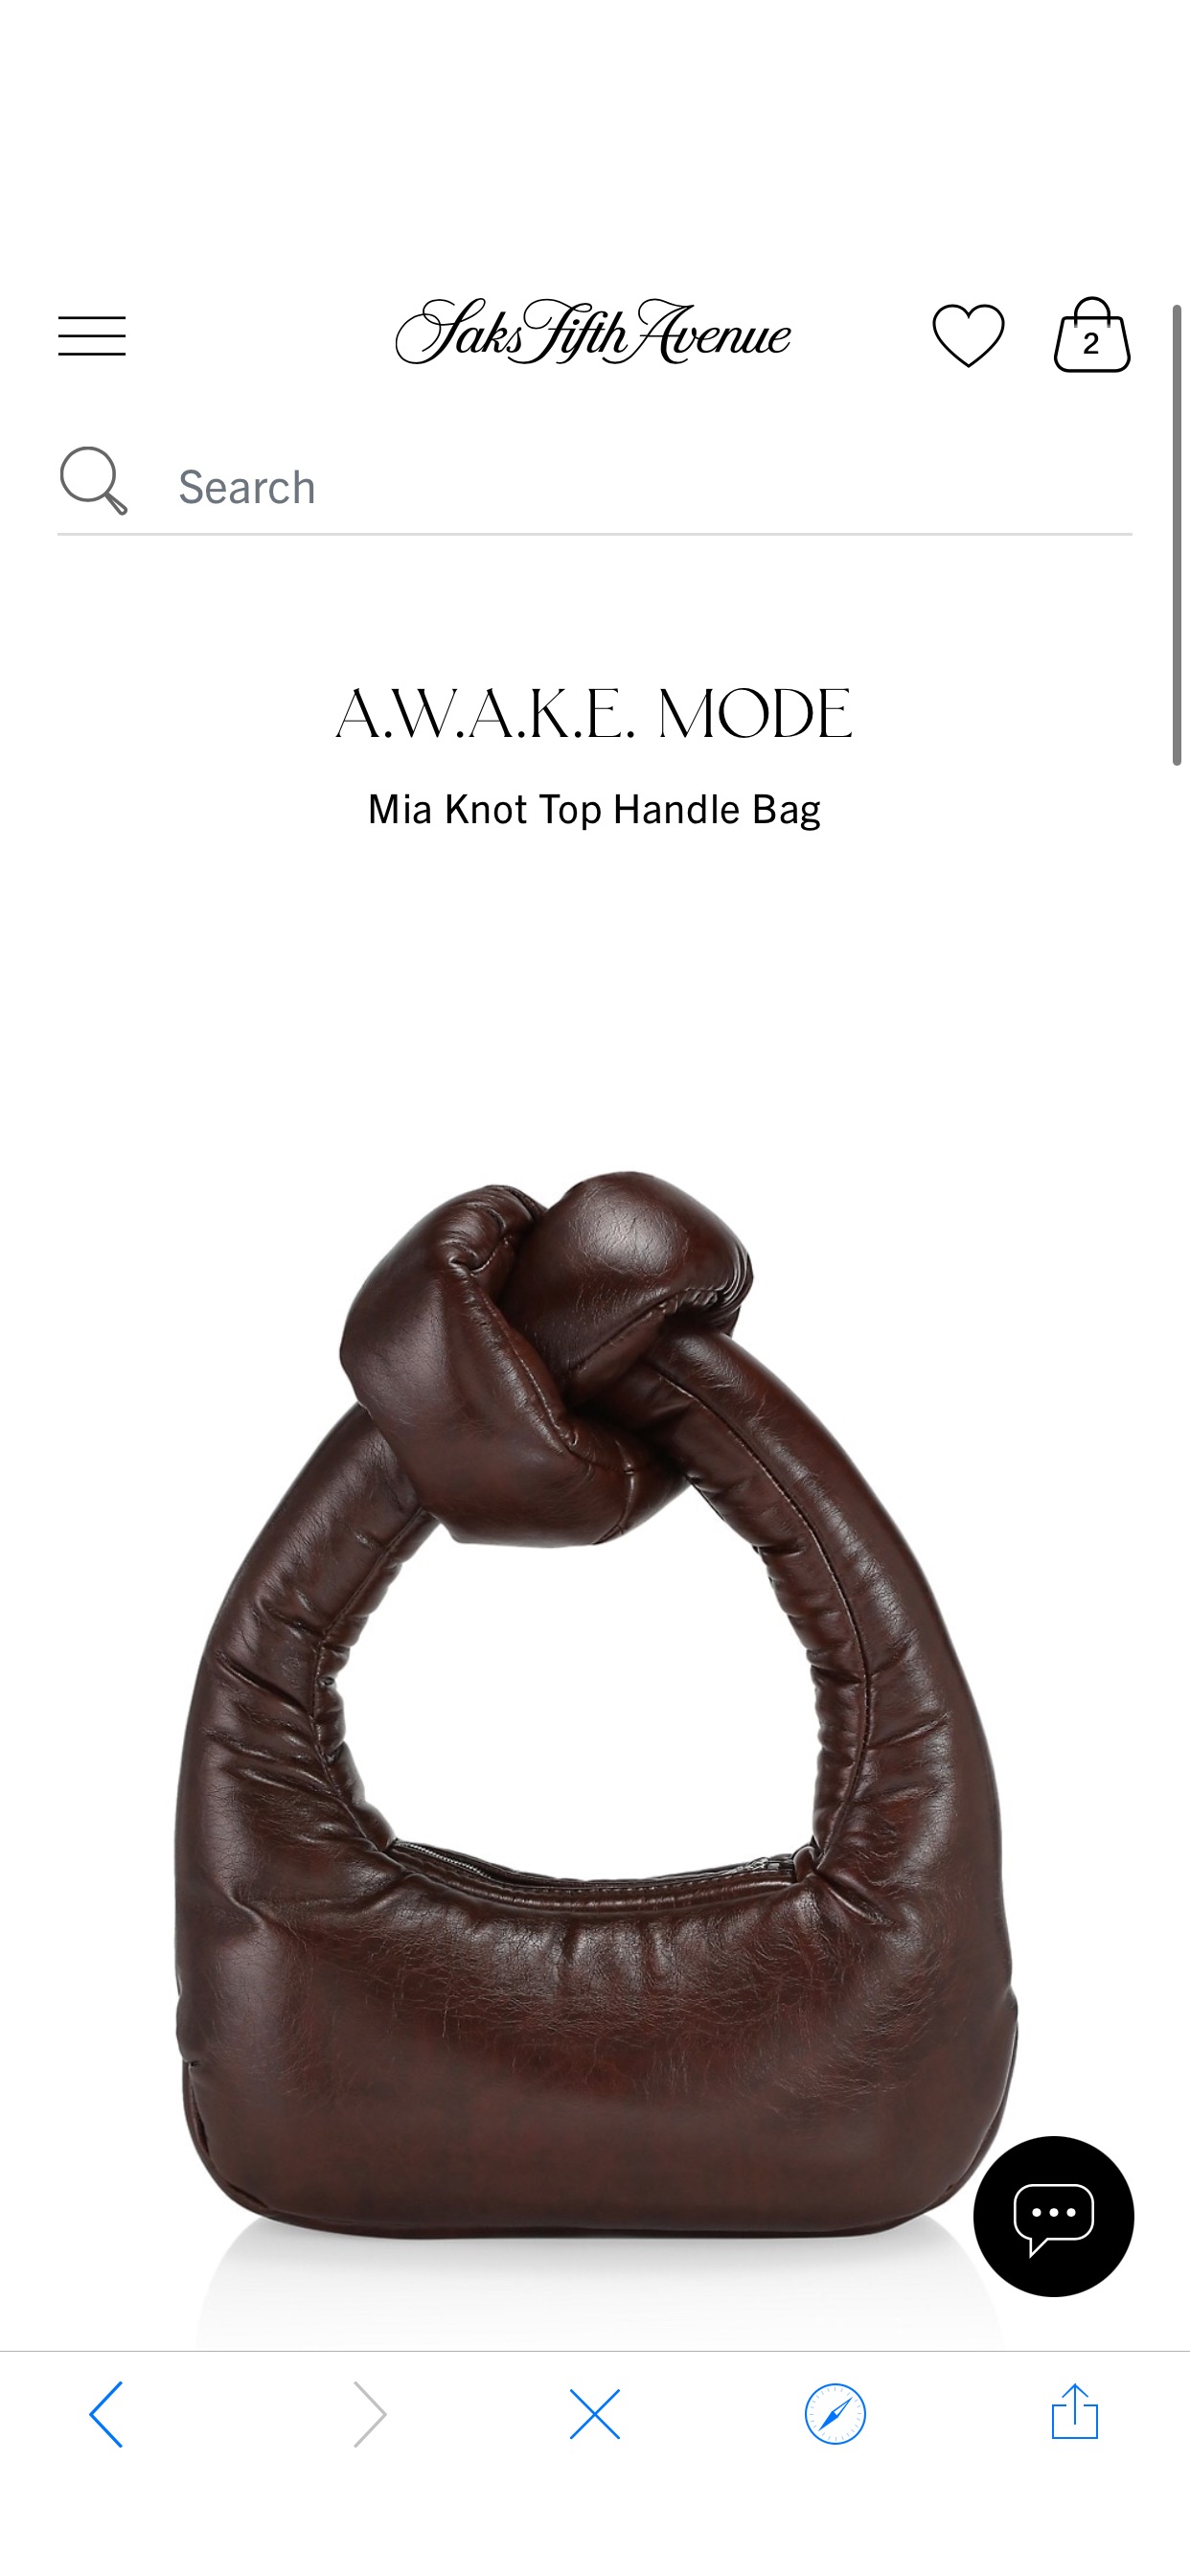 Shop A.W.A.K.E. MODE Mia Knot Top Handle Bag | Saks Fifth Avenue
包包